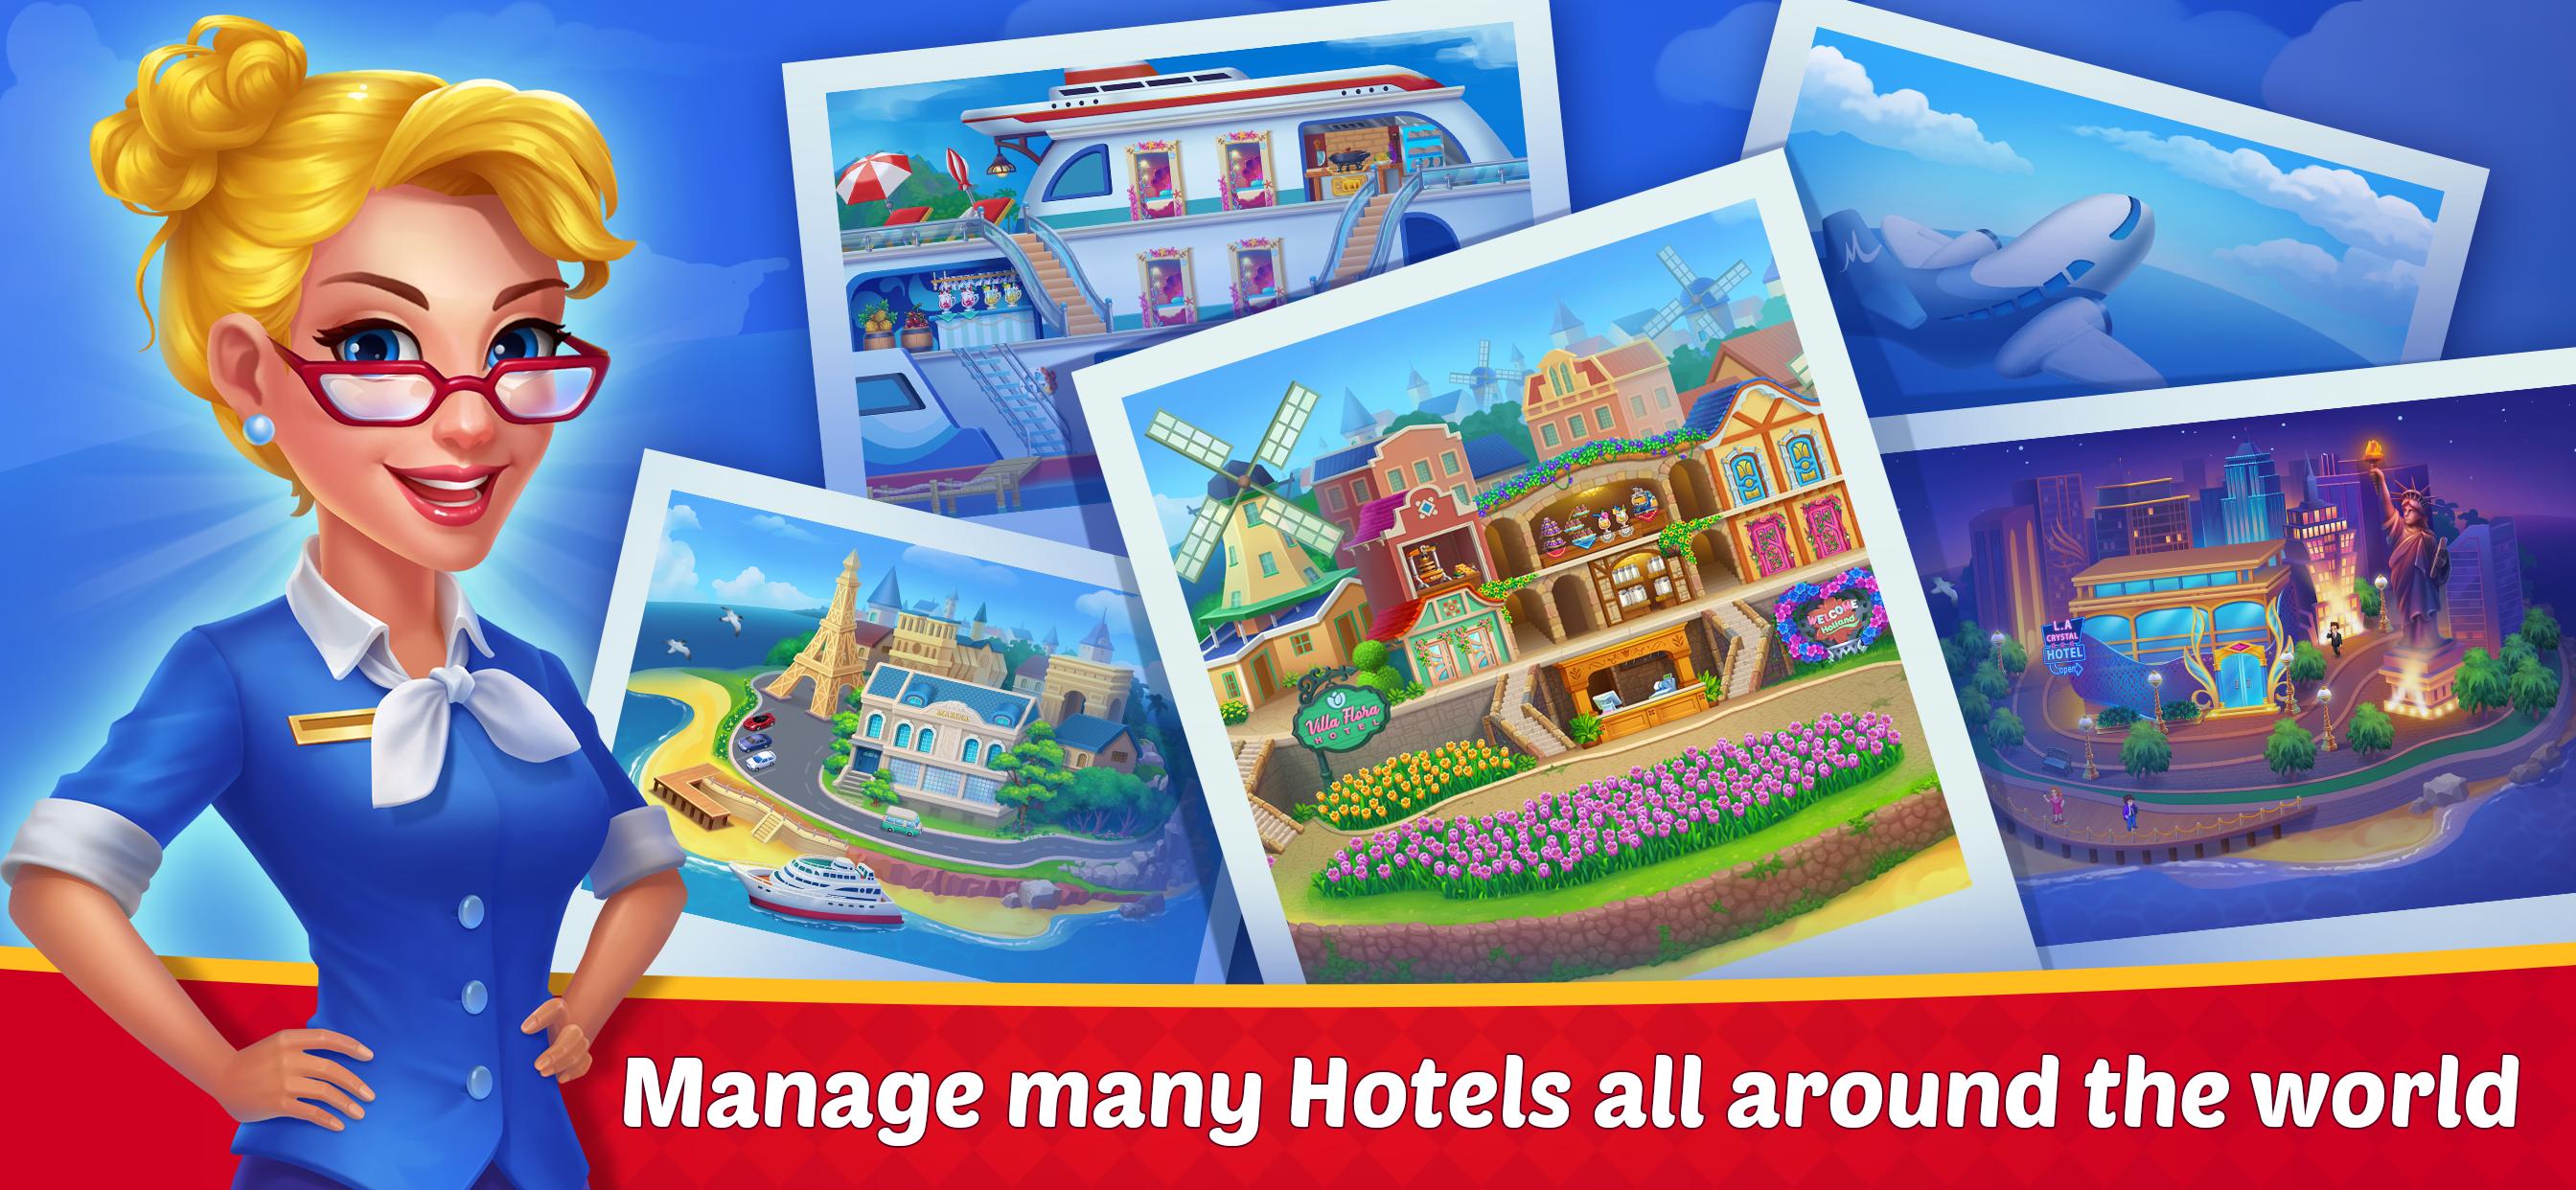 Dream Hotel Hotel Manager Simulation games 1.2.4 Screenshot 9